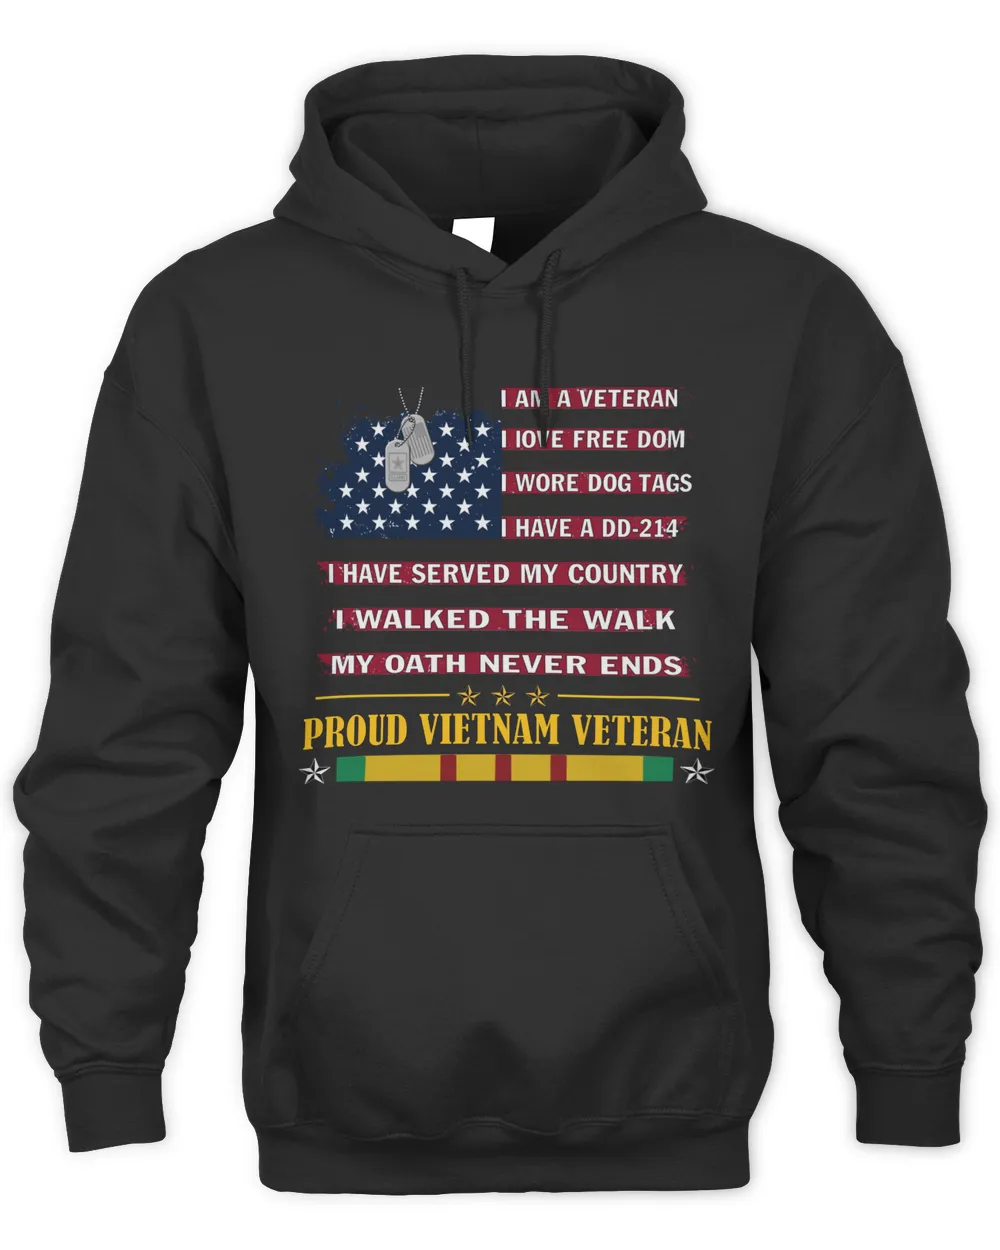 I'm pround Vietnam Veteran